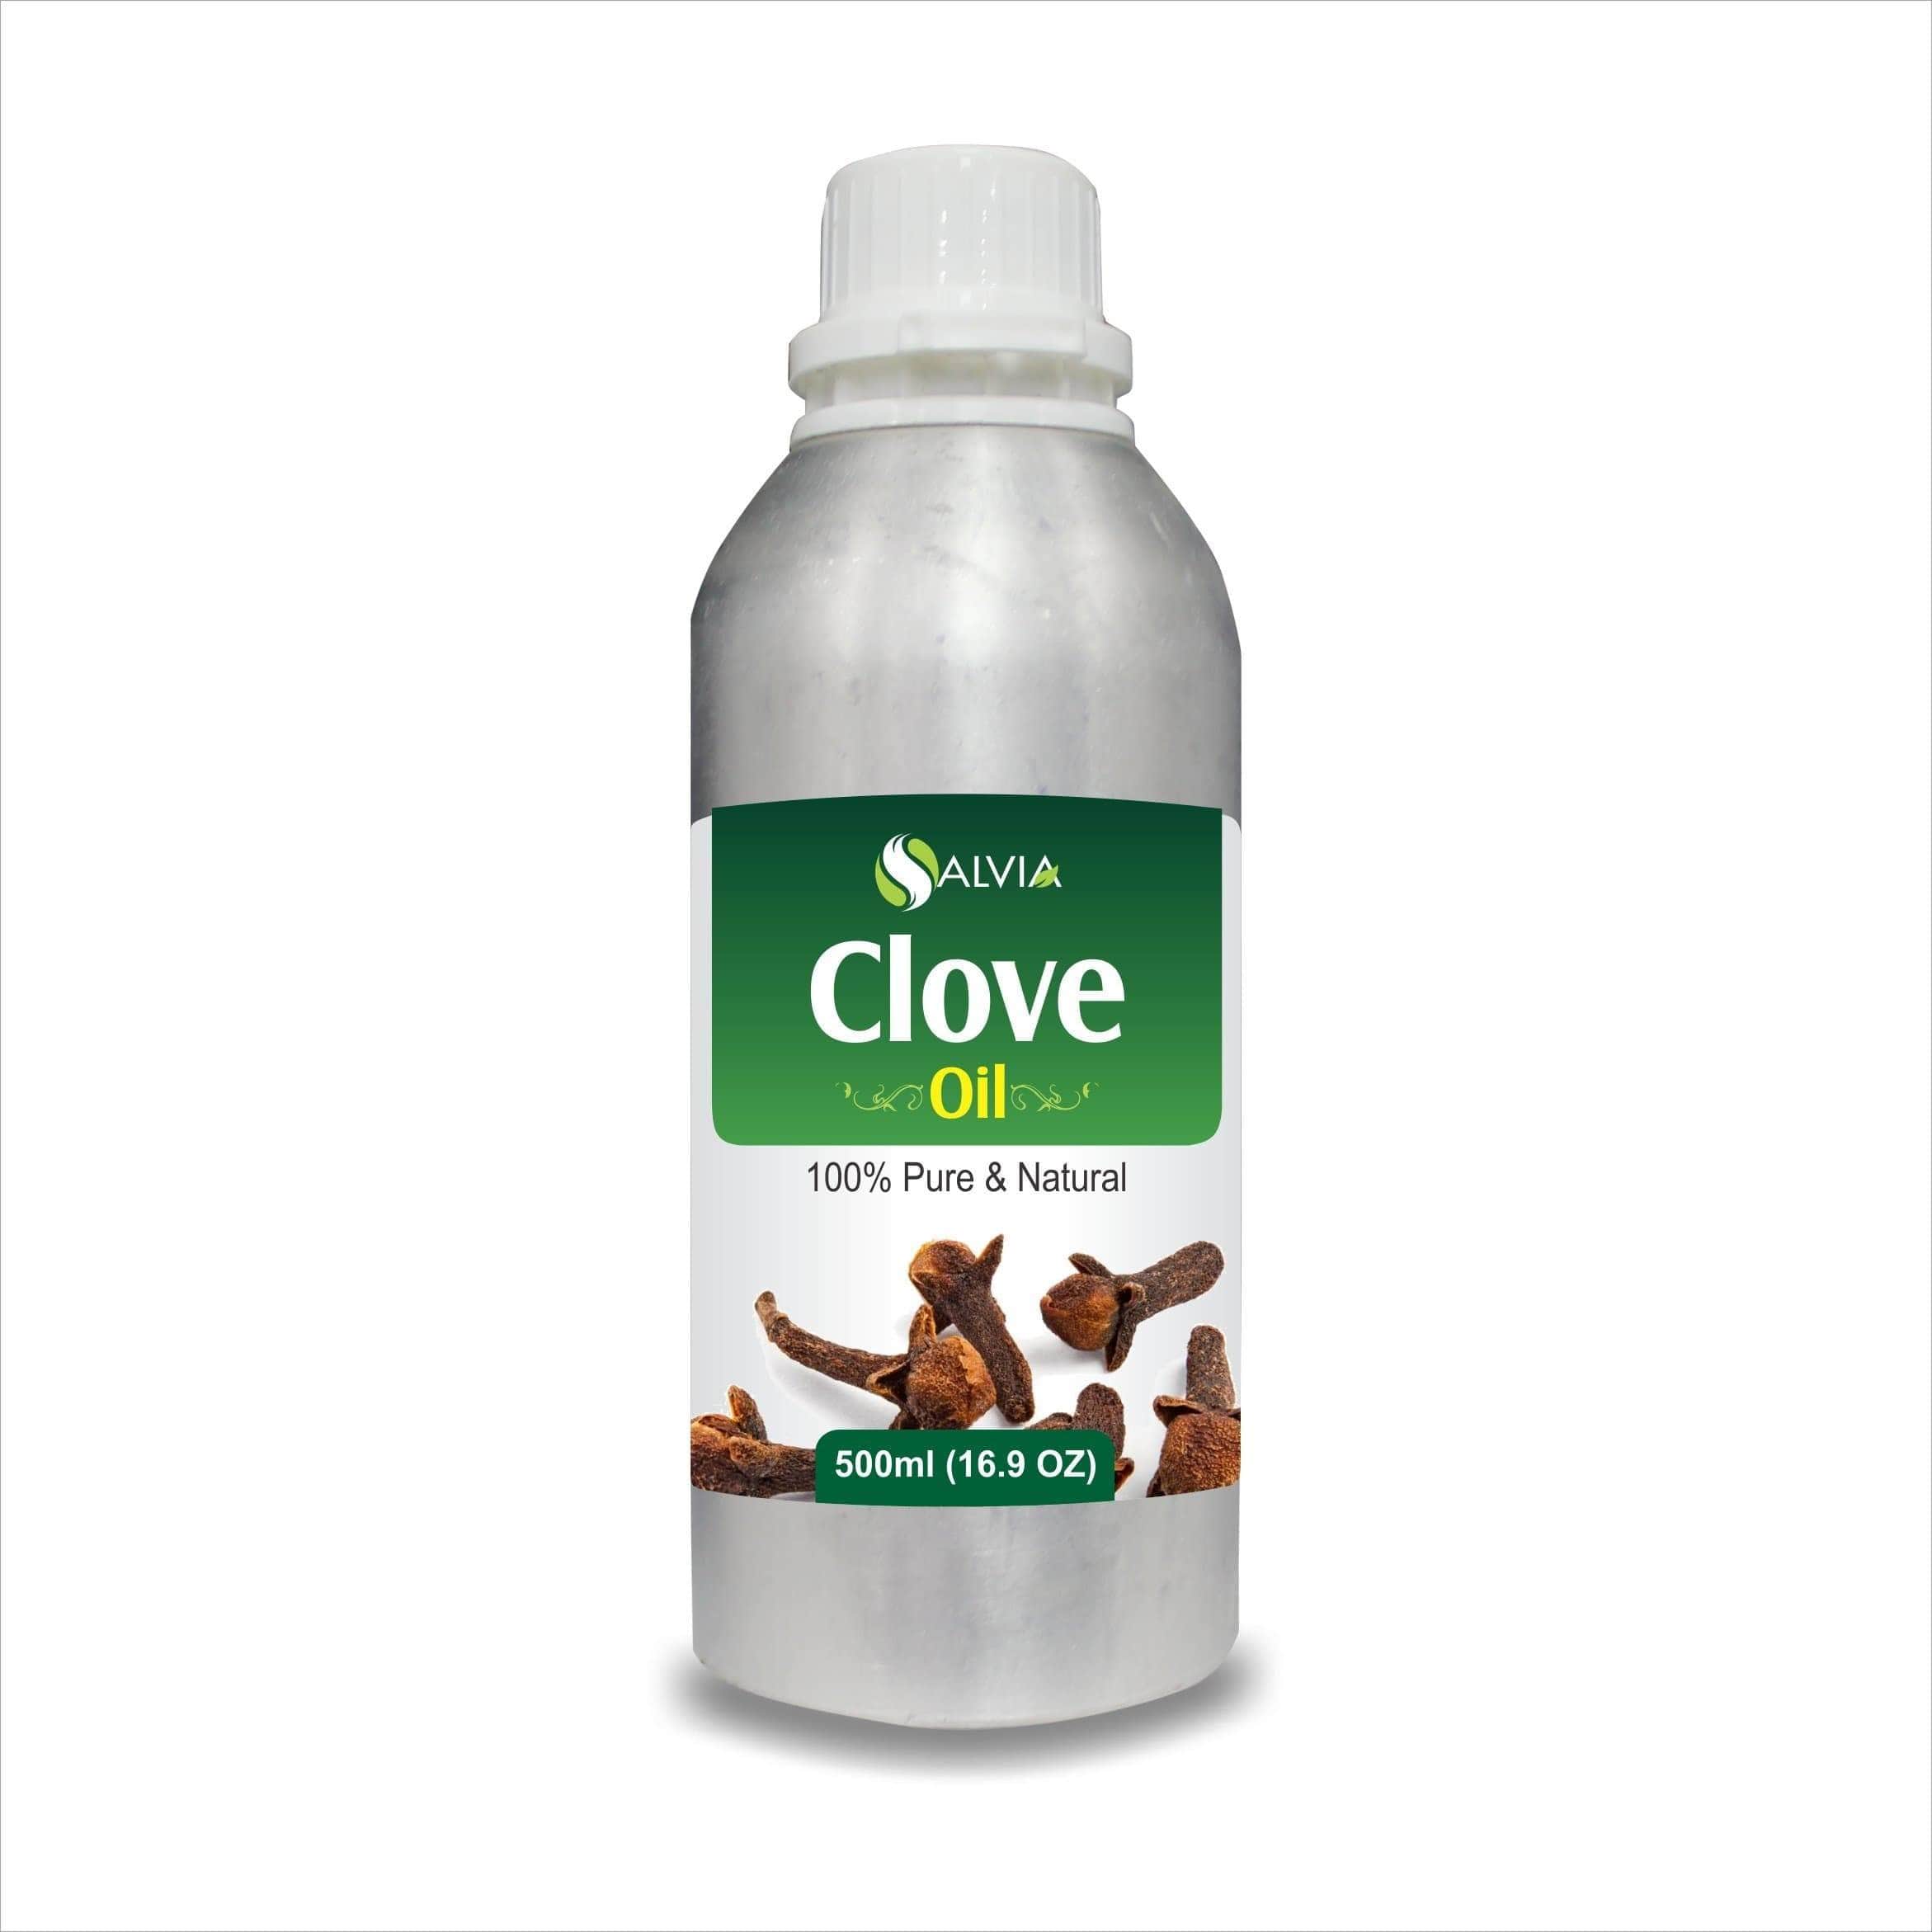 clove oil price